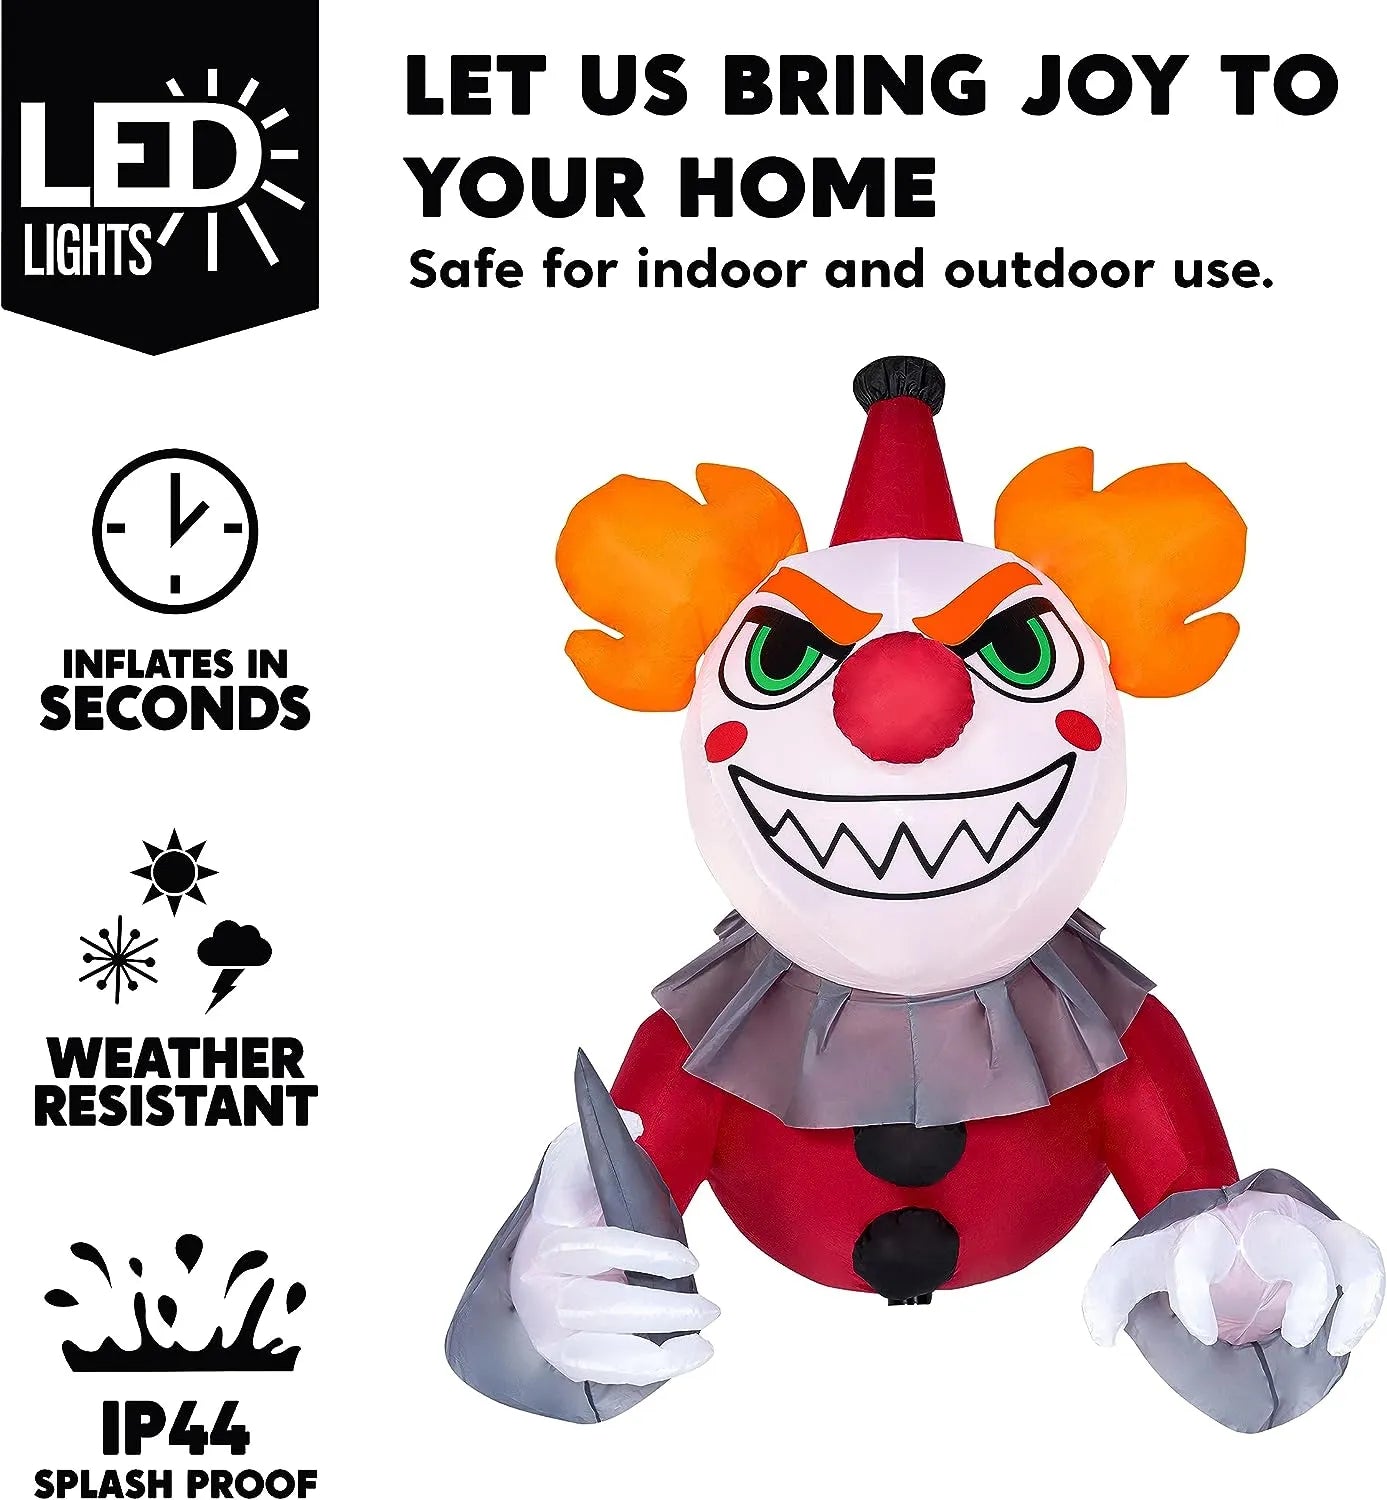 4.5ft Killer Clown Window Breaker Inflatable Decoration